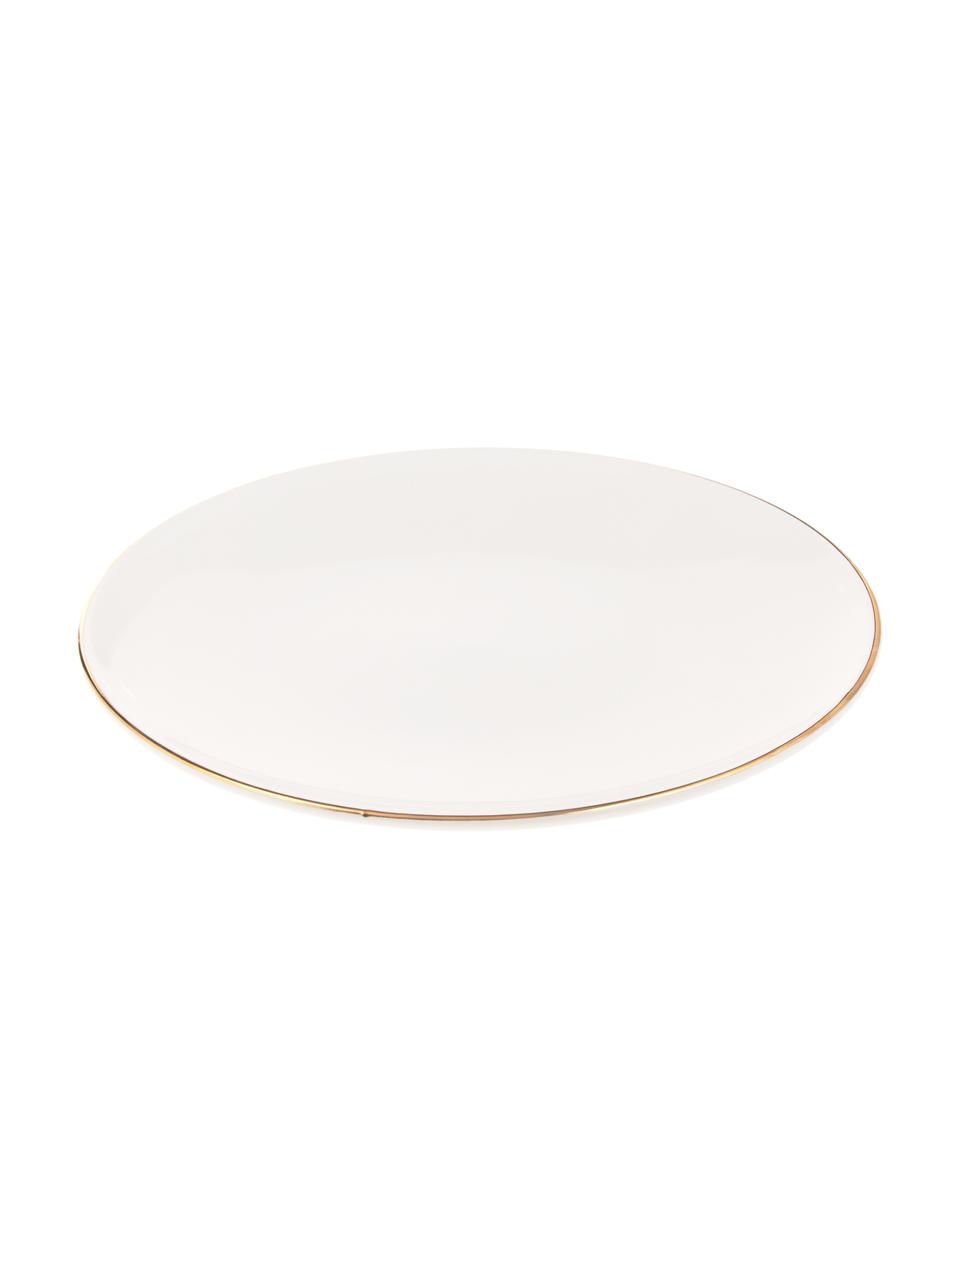 Handgemaakte ontbijtborden Allure met goudkleurige rand, 6 stuks, Keramiek, Wit, goudkleurig, Ø 21 cm